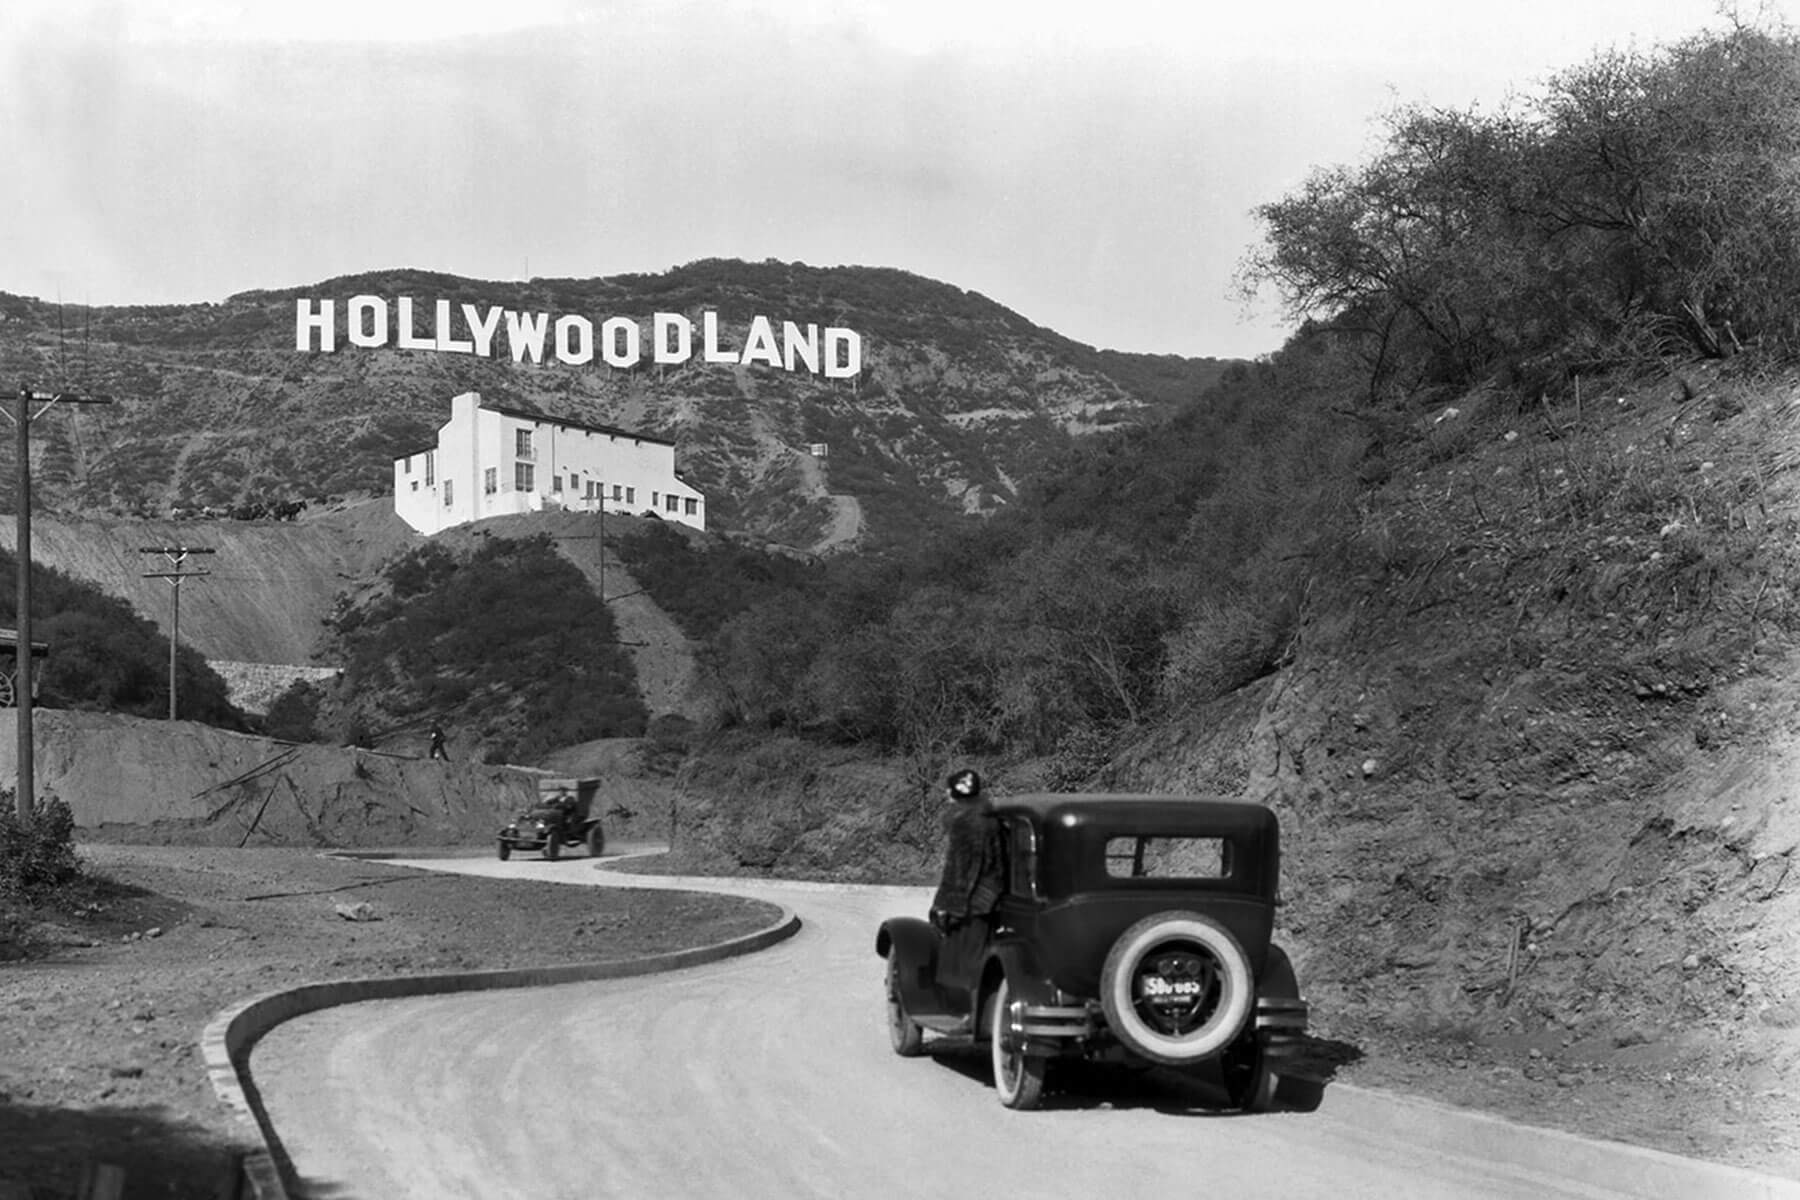 Hollywoodland sign